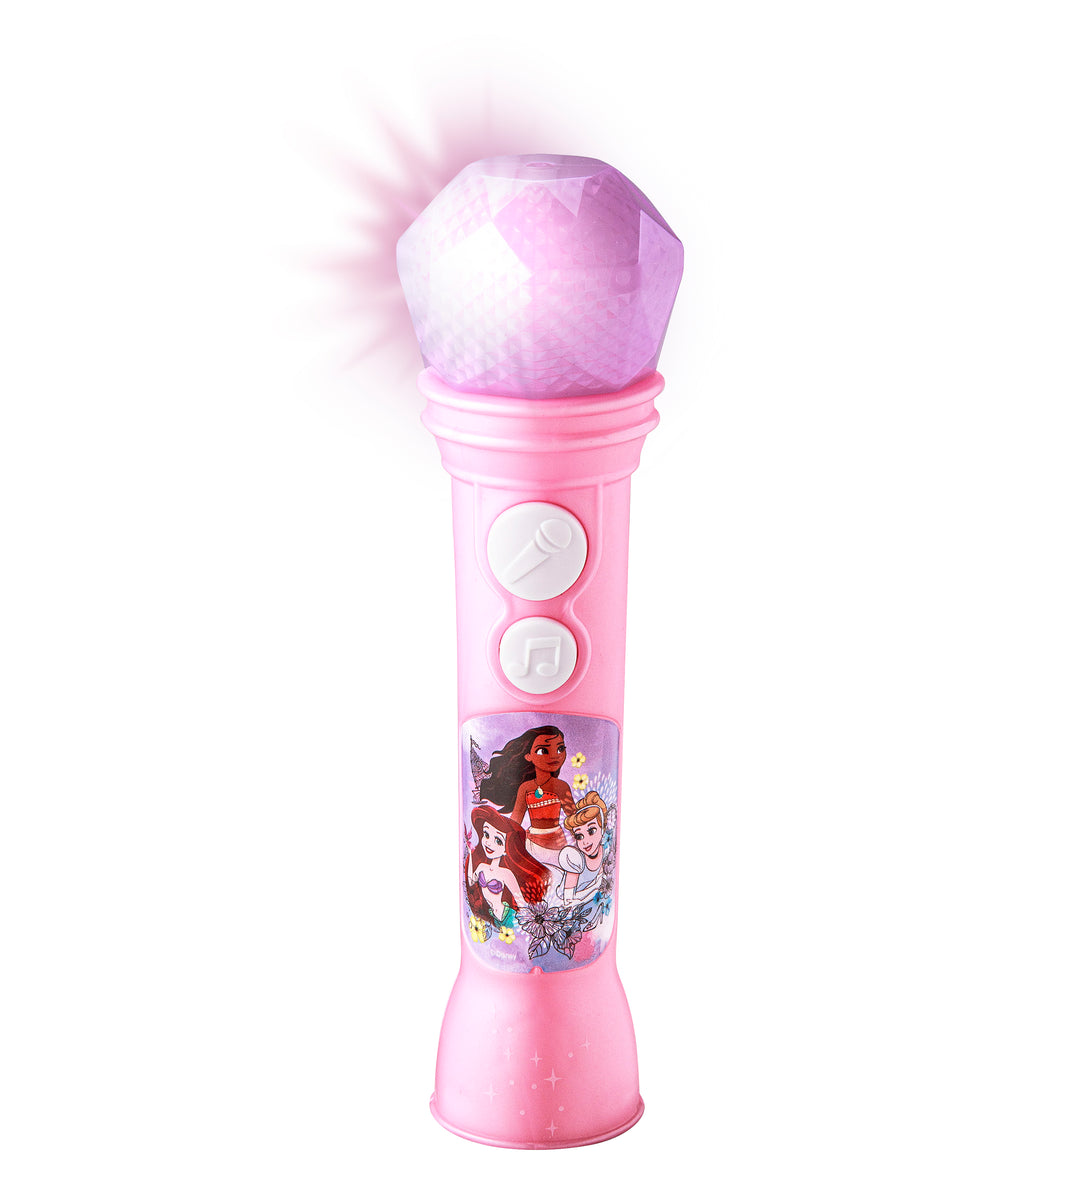 Disney Princess Karaoke Microphone Toy for Kids